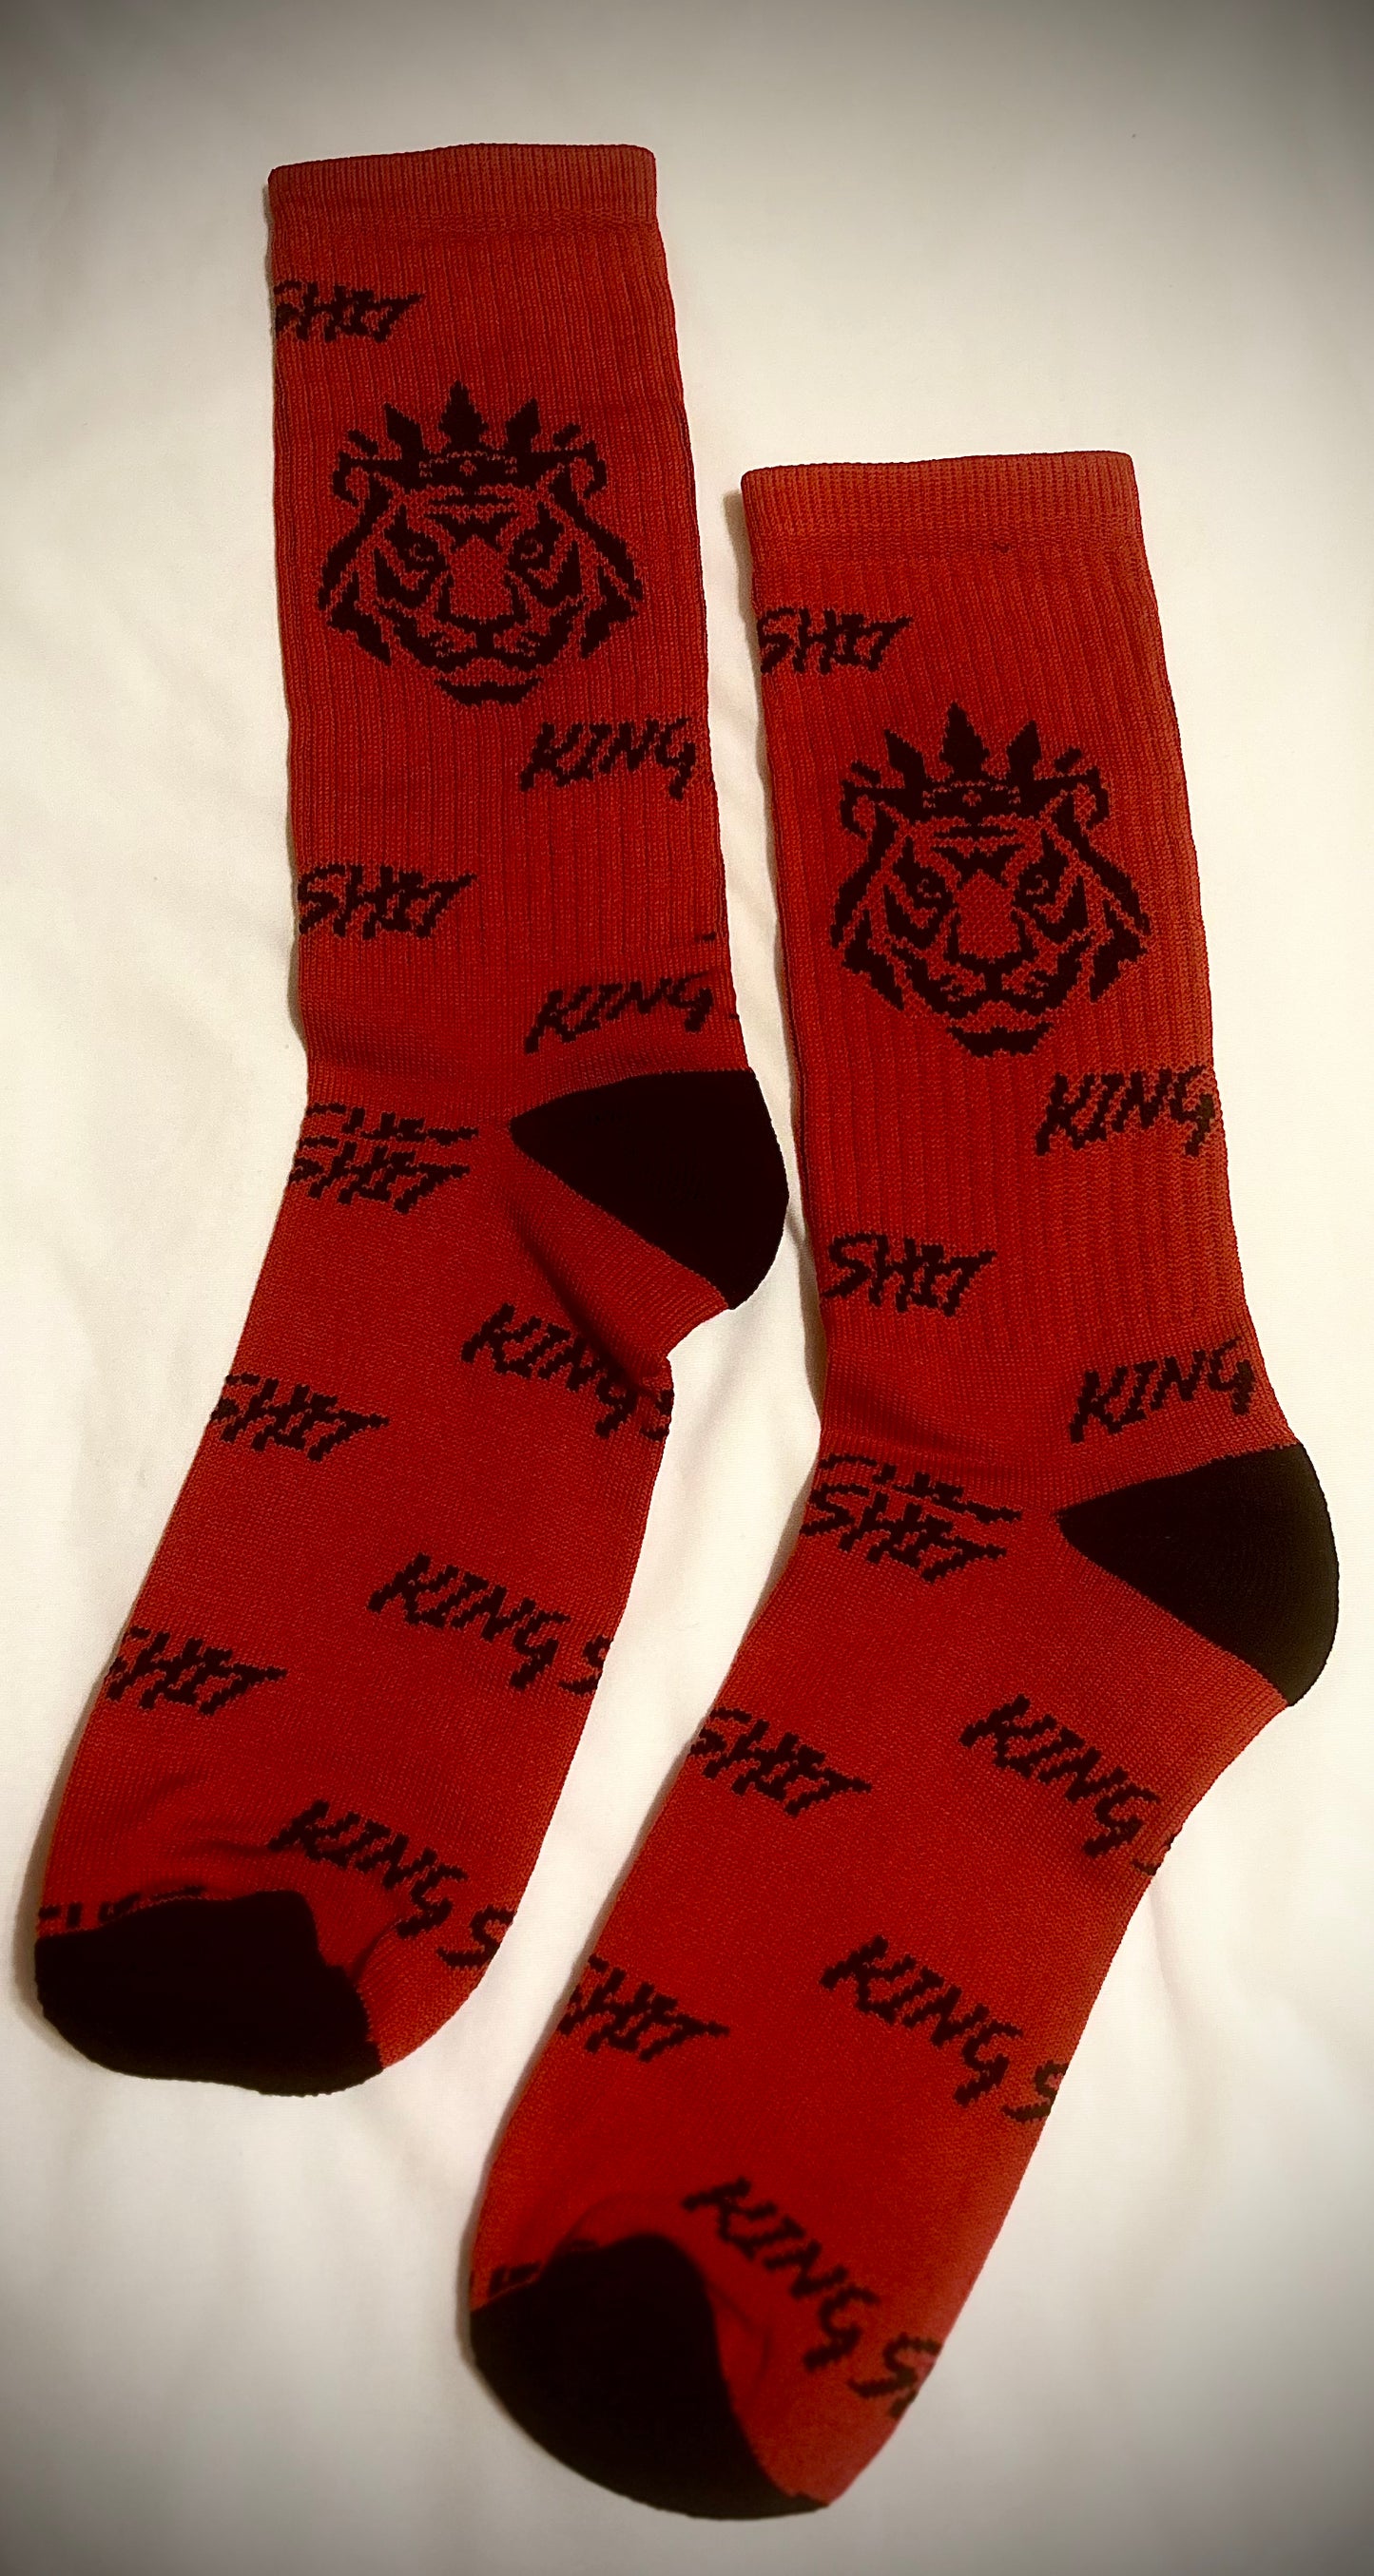 King Sh!T socks